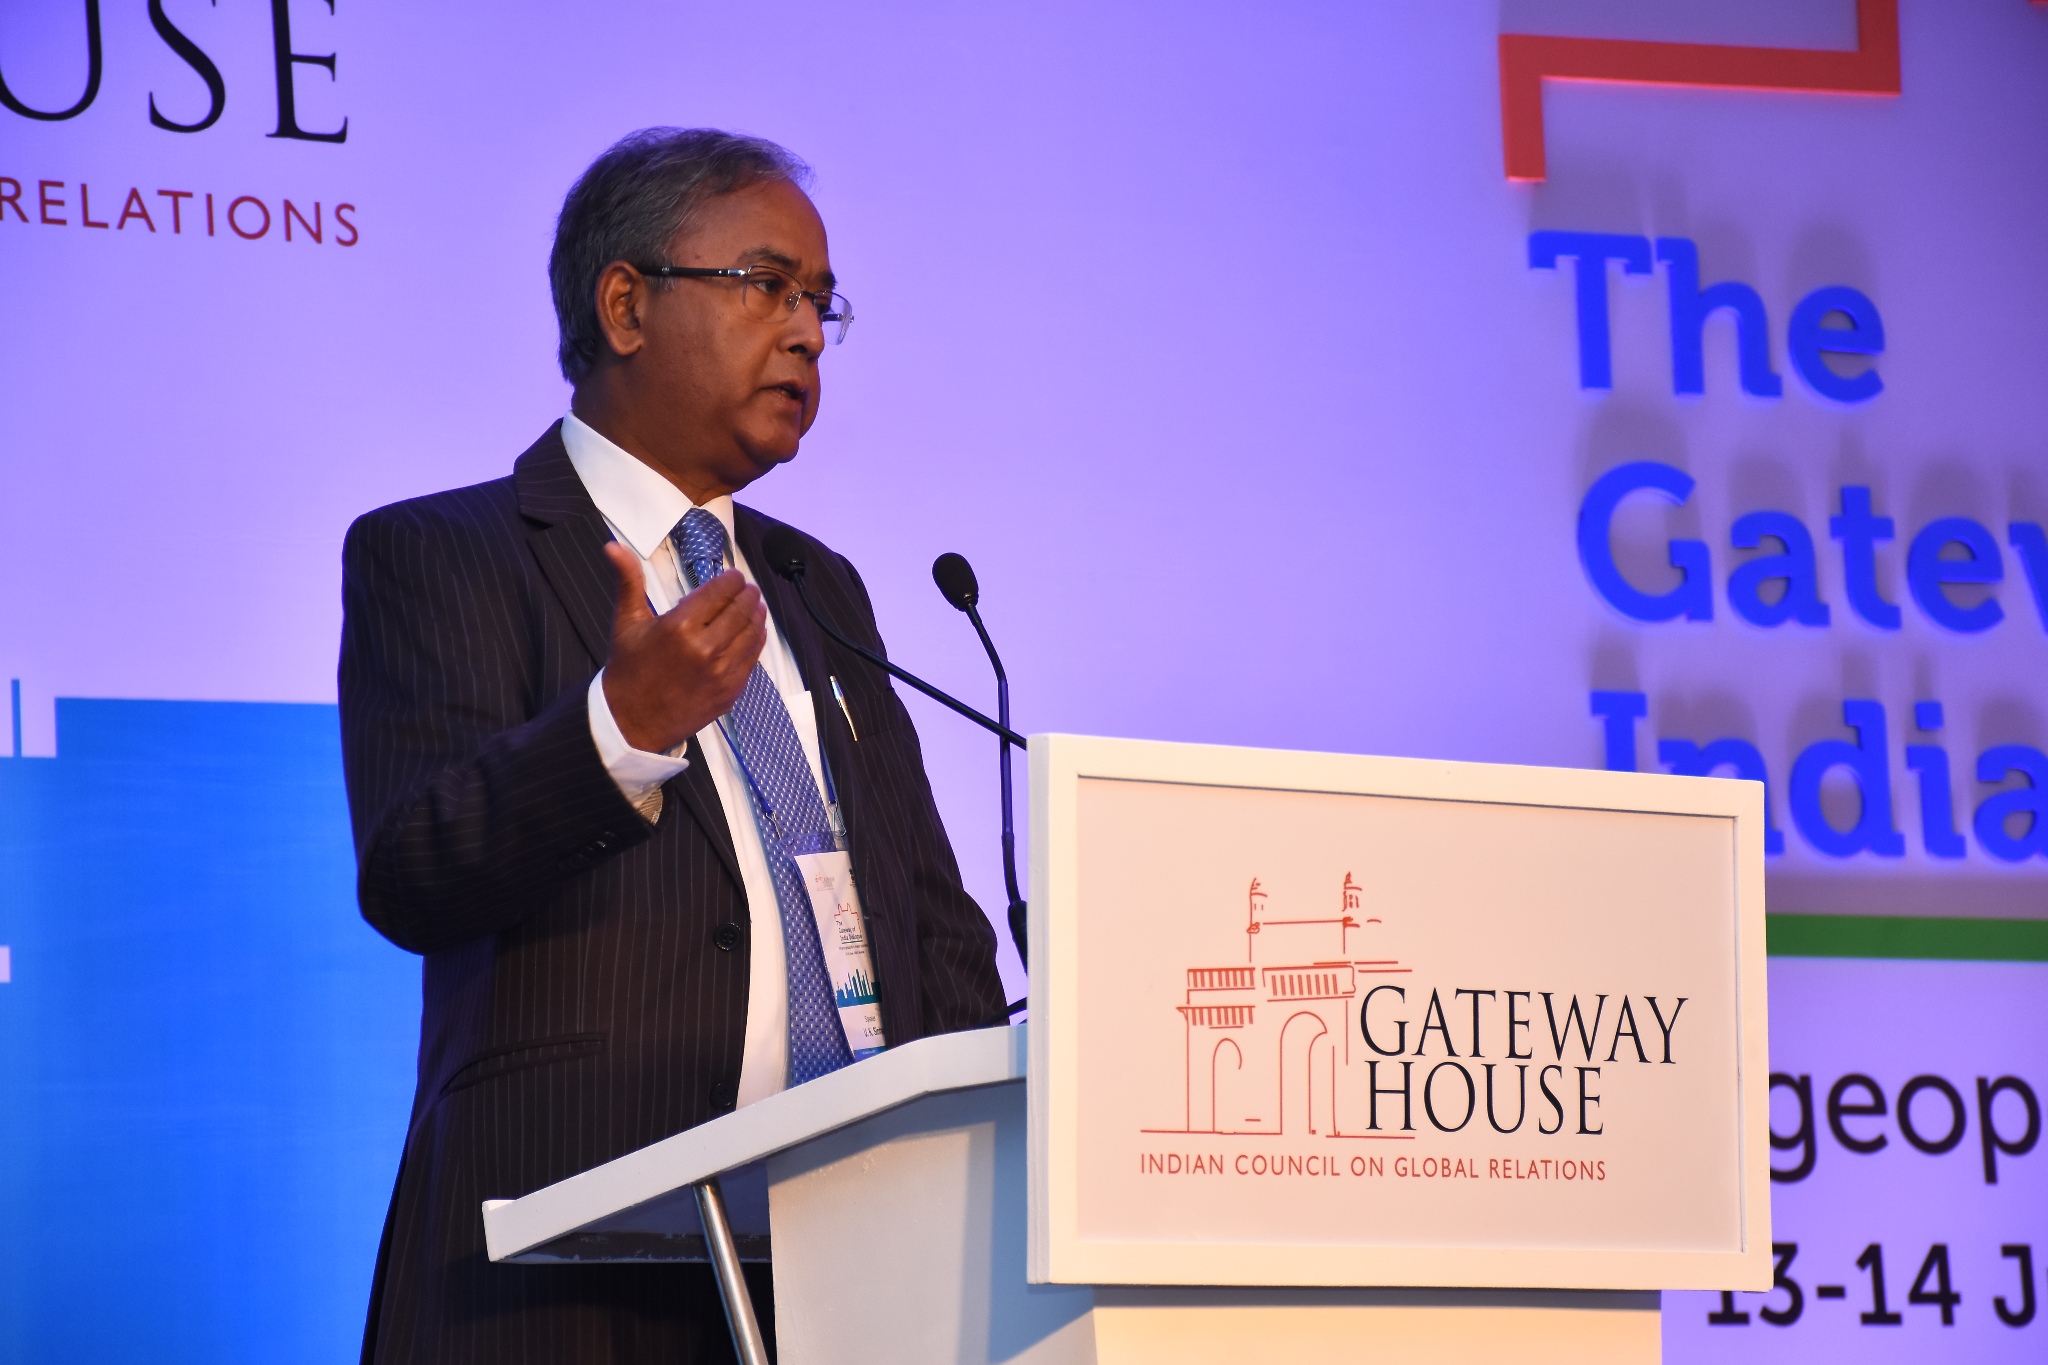 ‘Gateway of India Dialogue’ on Feb 13-14 in Mumbai